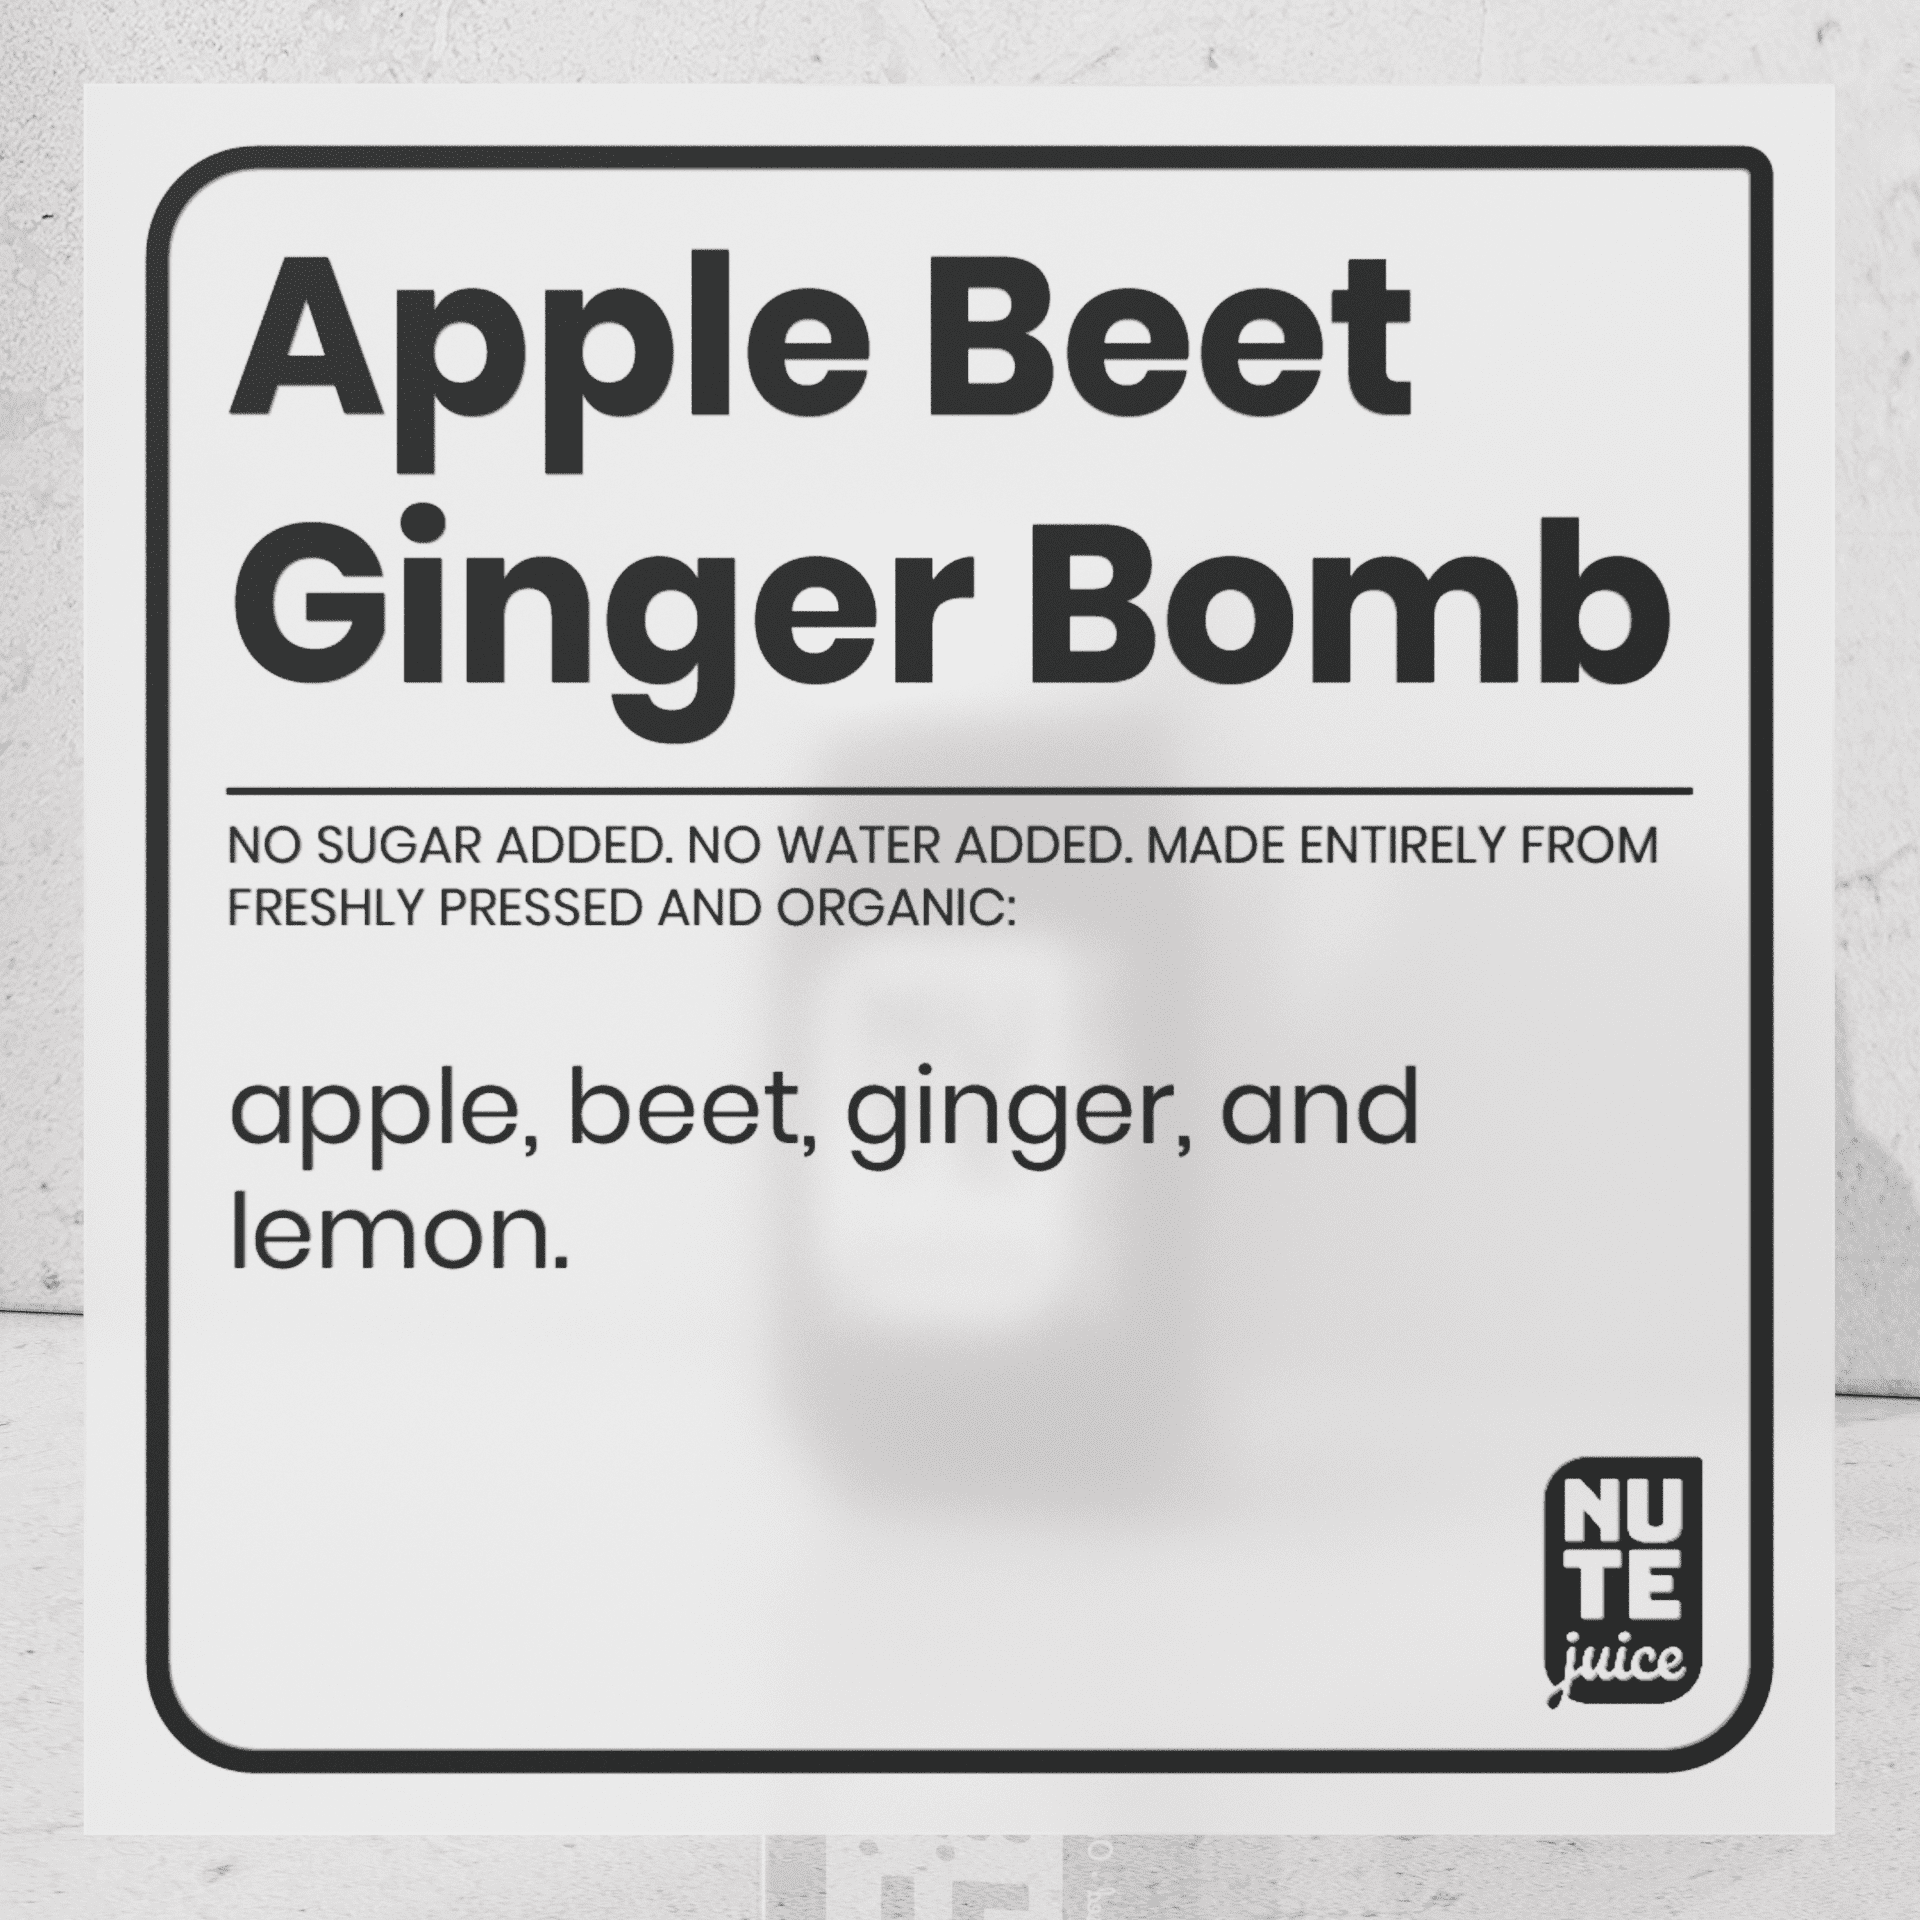 Apple beet ginger bomb ingredients